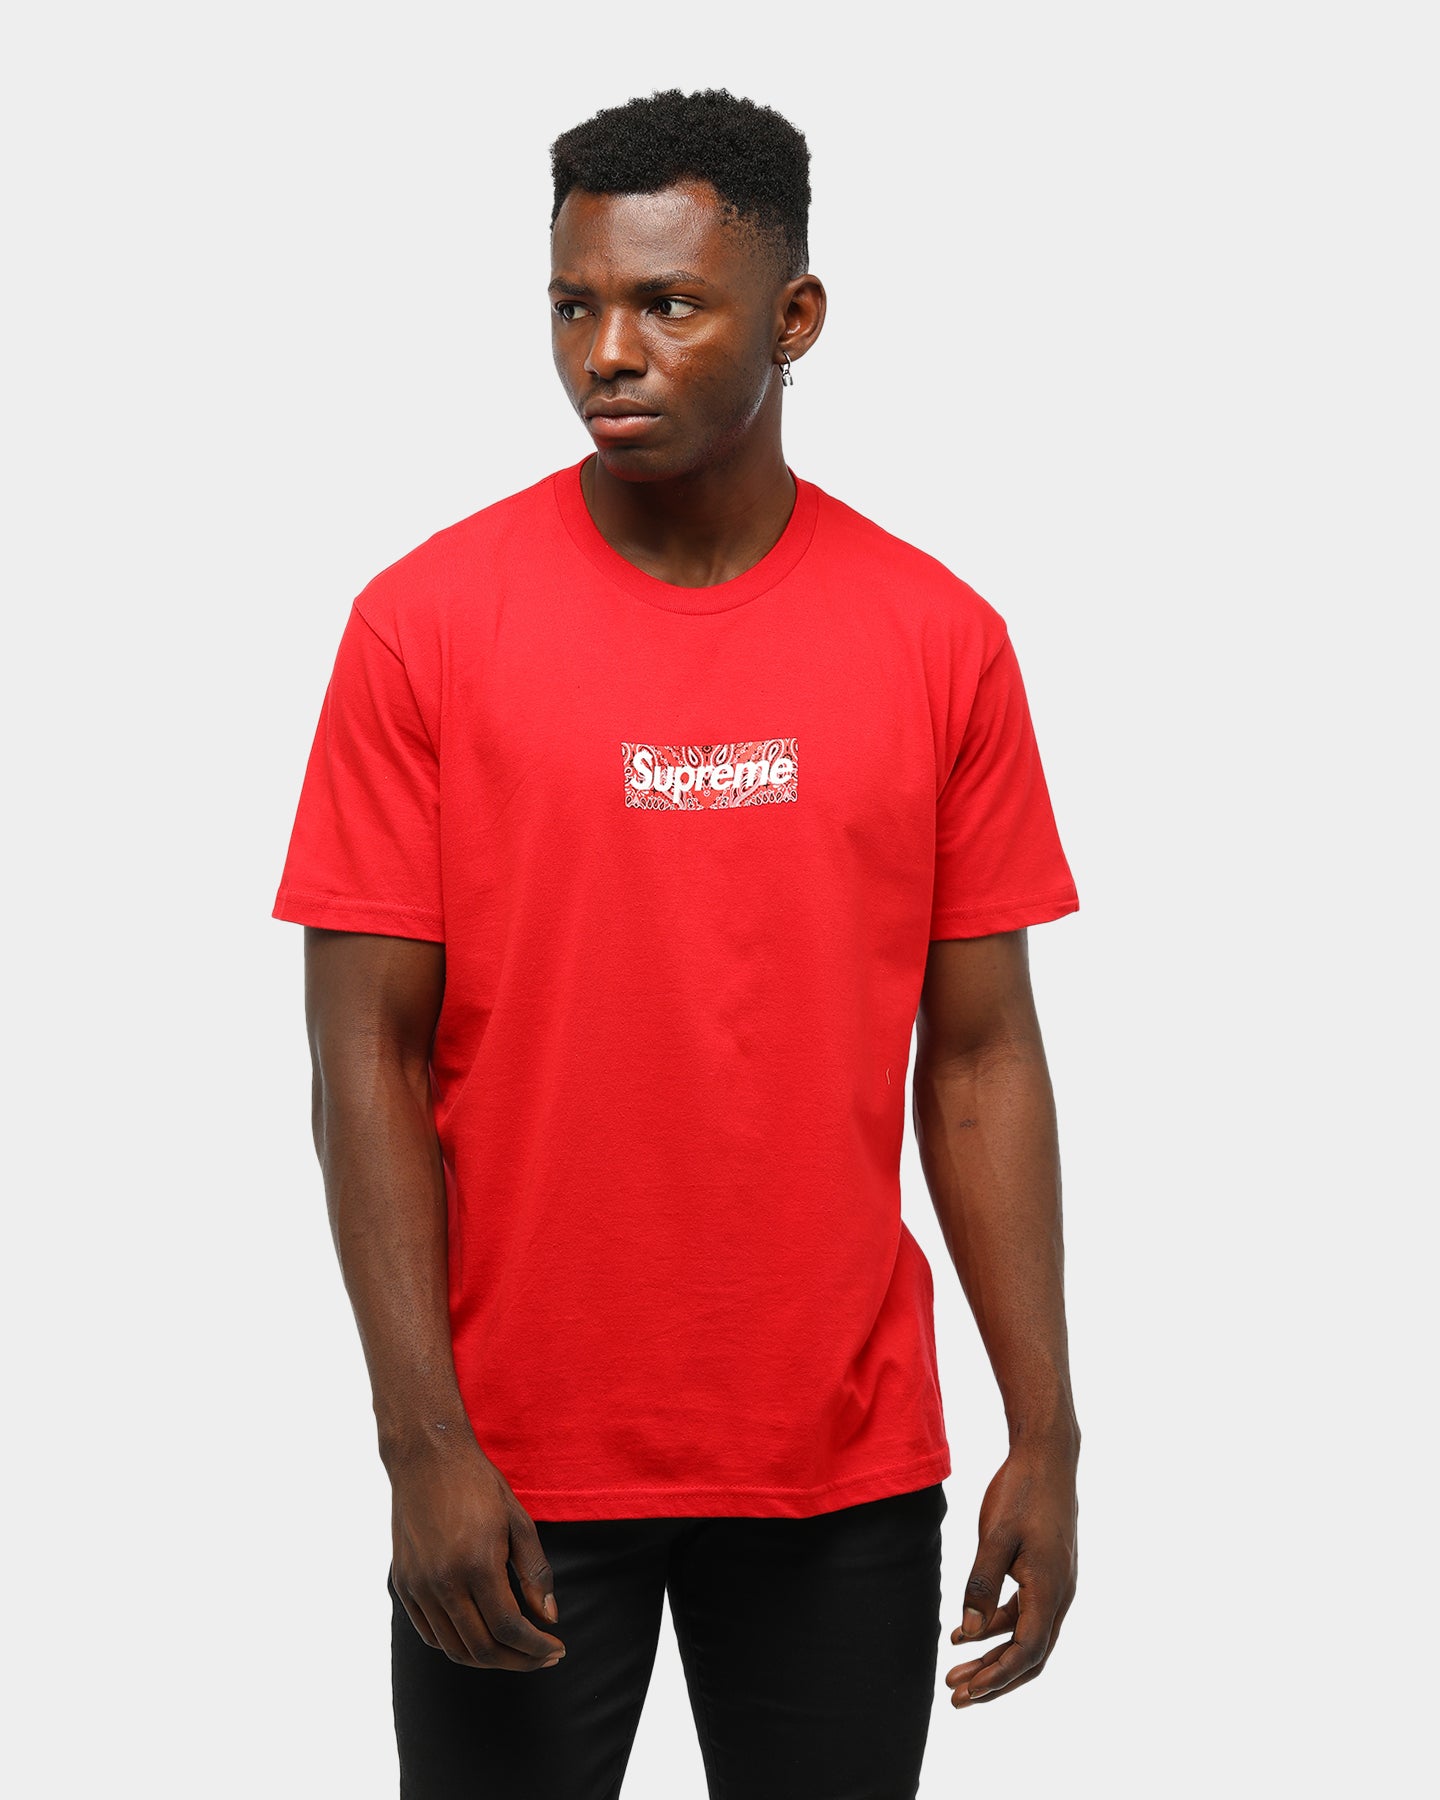 supreme red box logo t shirt